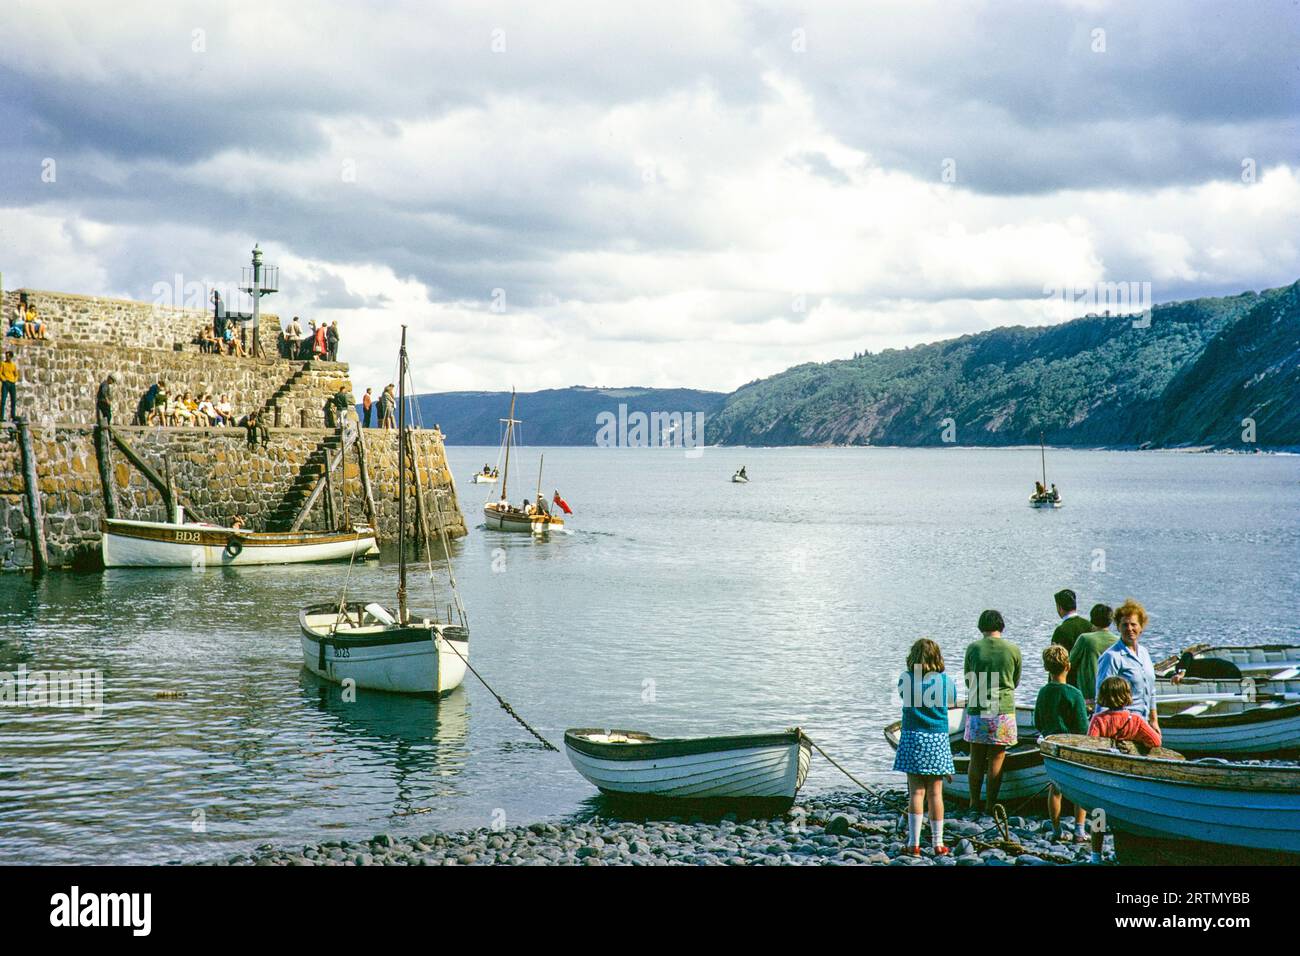 Harbour waterfront, Clovelly, North Devon, England UK September 1968 Stock Photo